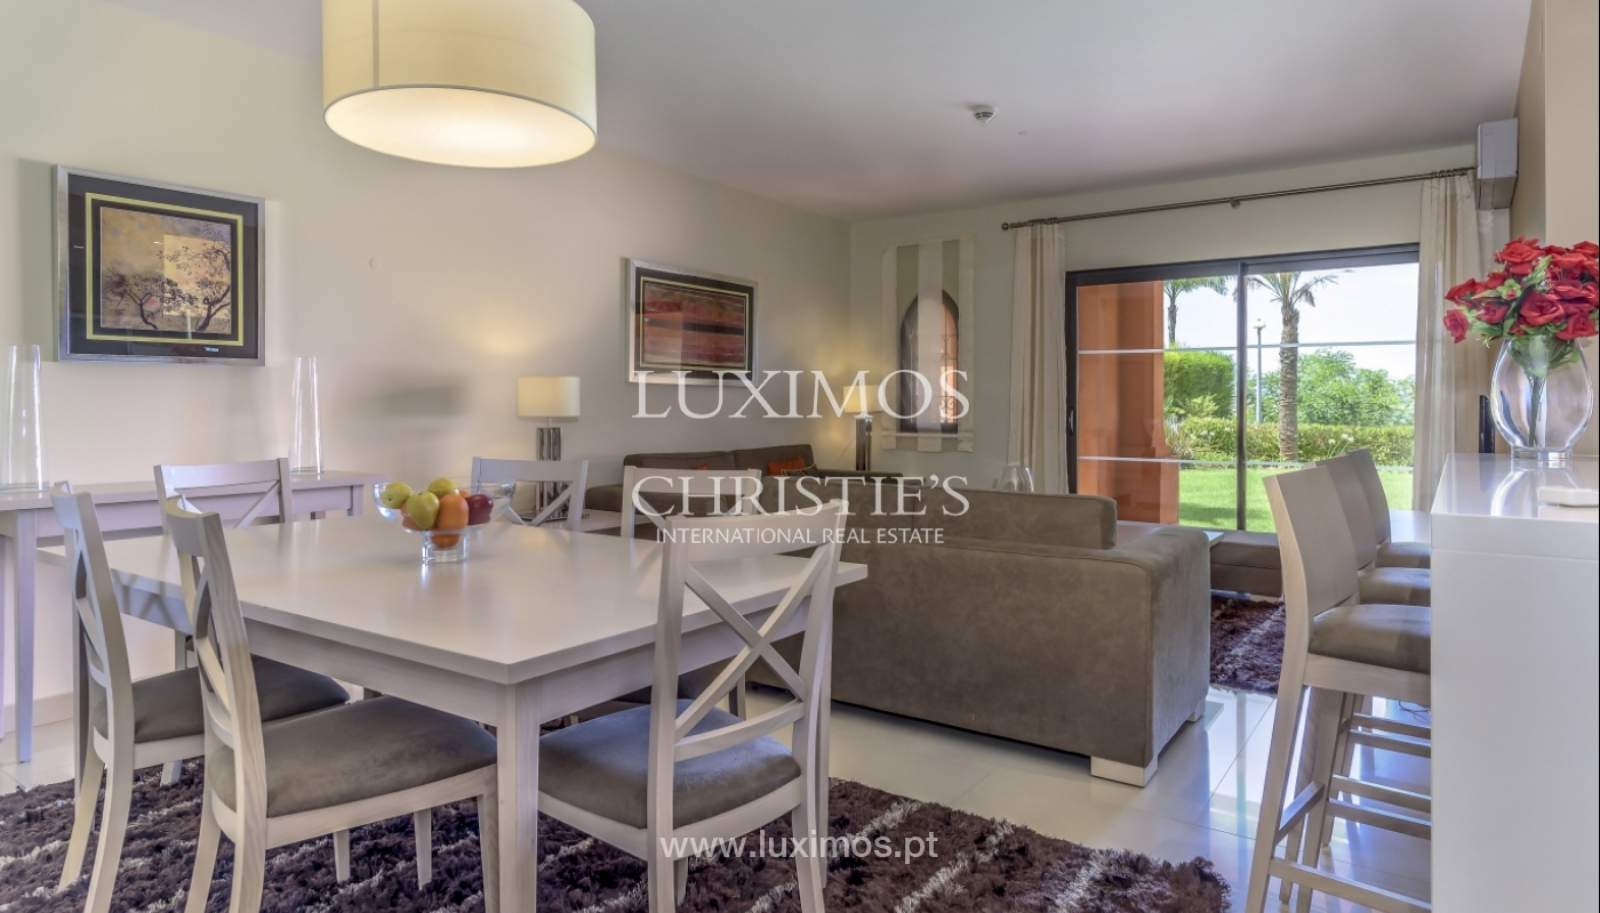 Venda de apartamento contemporâneo em Resort de Golfe exclusivo, Algarve_152567